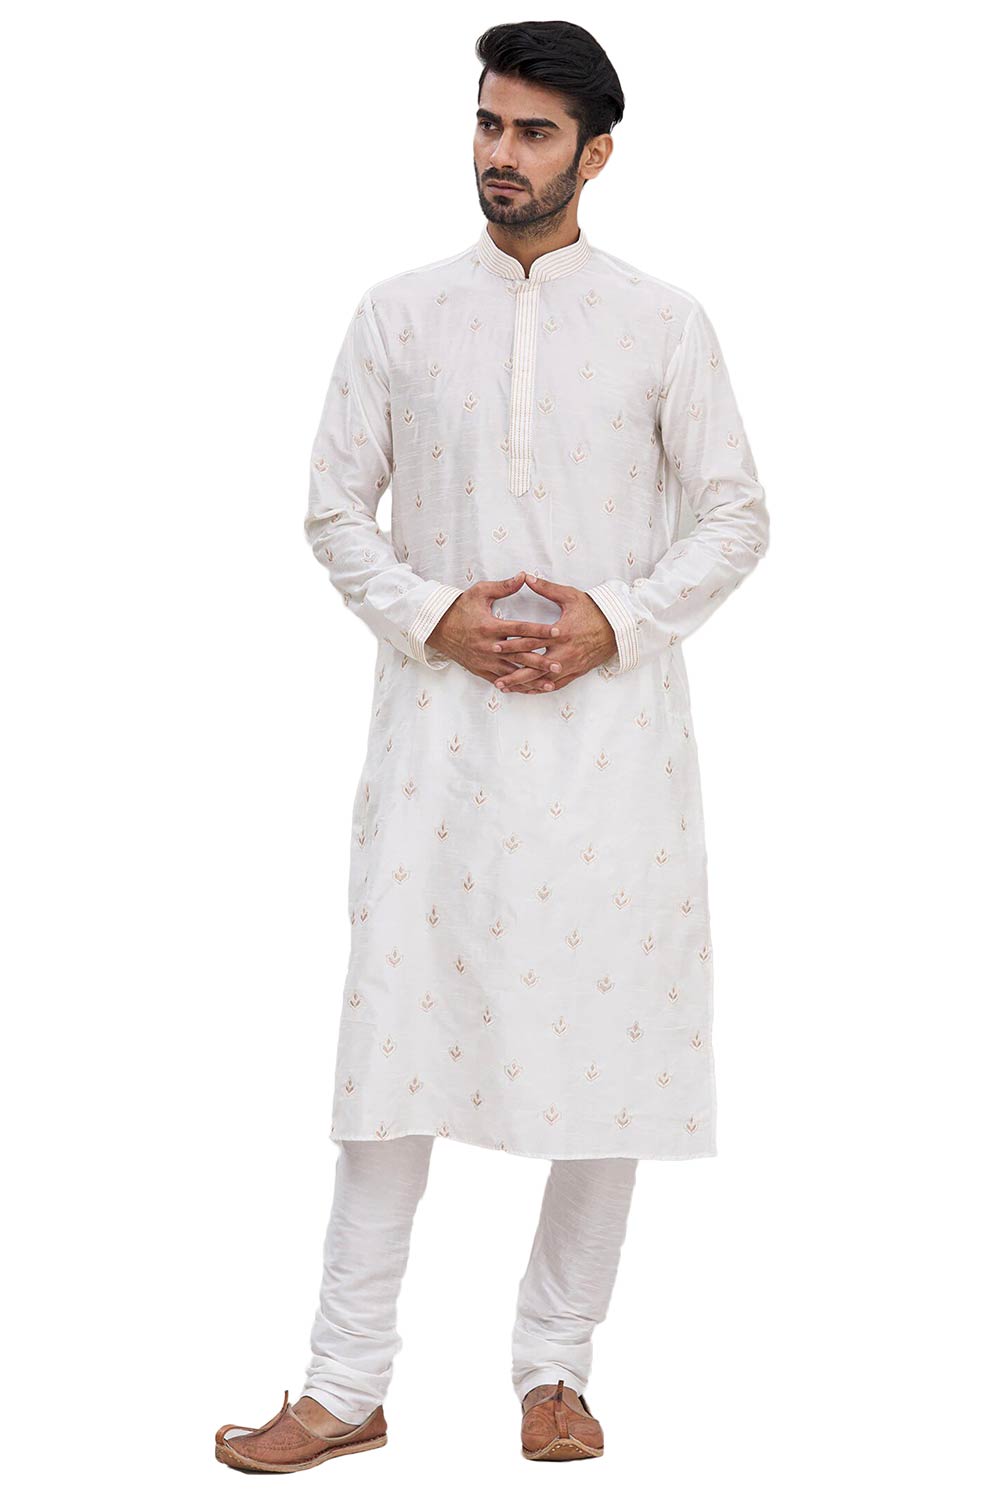 Men's Off White Cotton Embroidered Full Sleeve Kurta Churidar